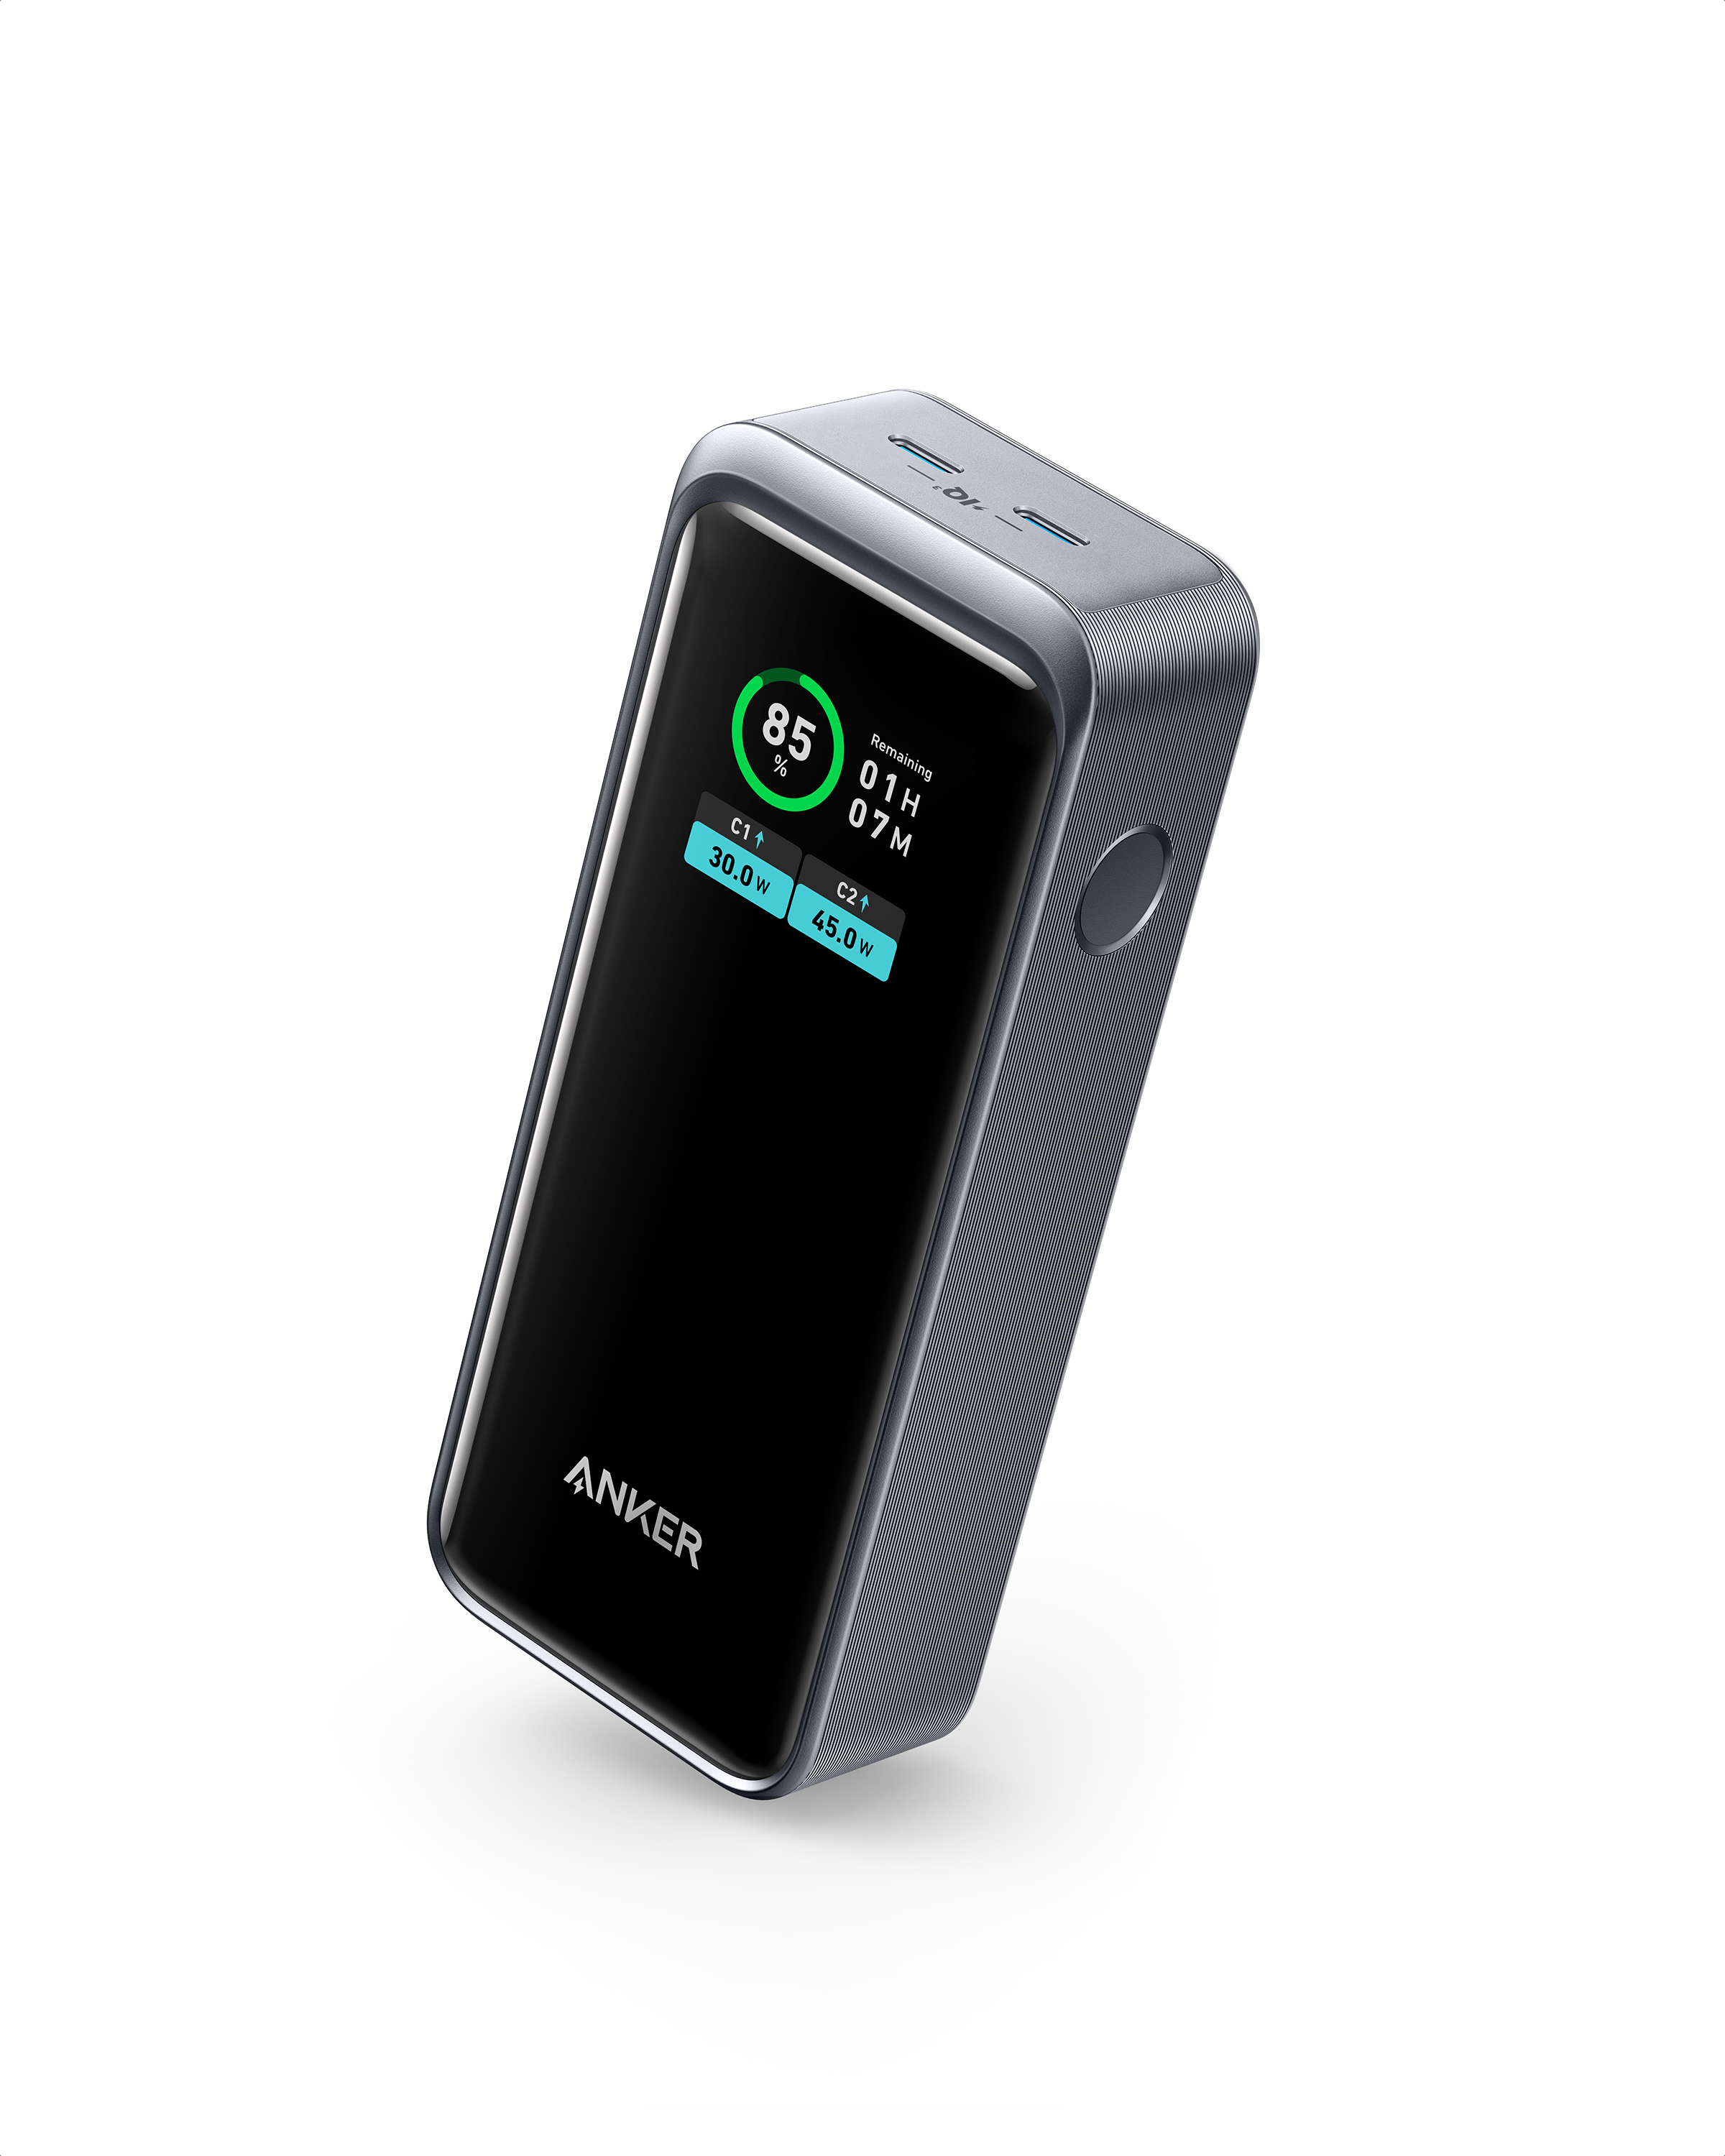 Anker史上最高峰の充電器シリーズ「Anker Prime」を発表。超高出力USB 